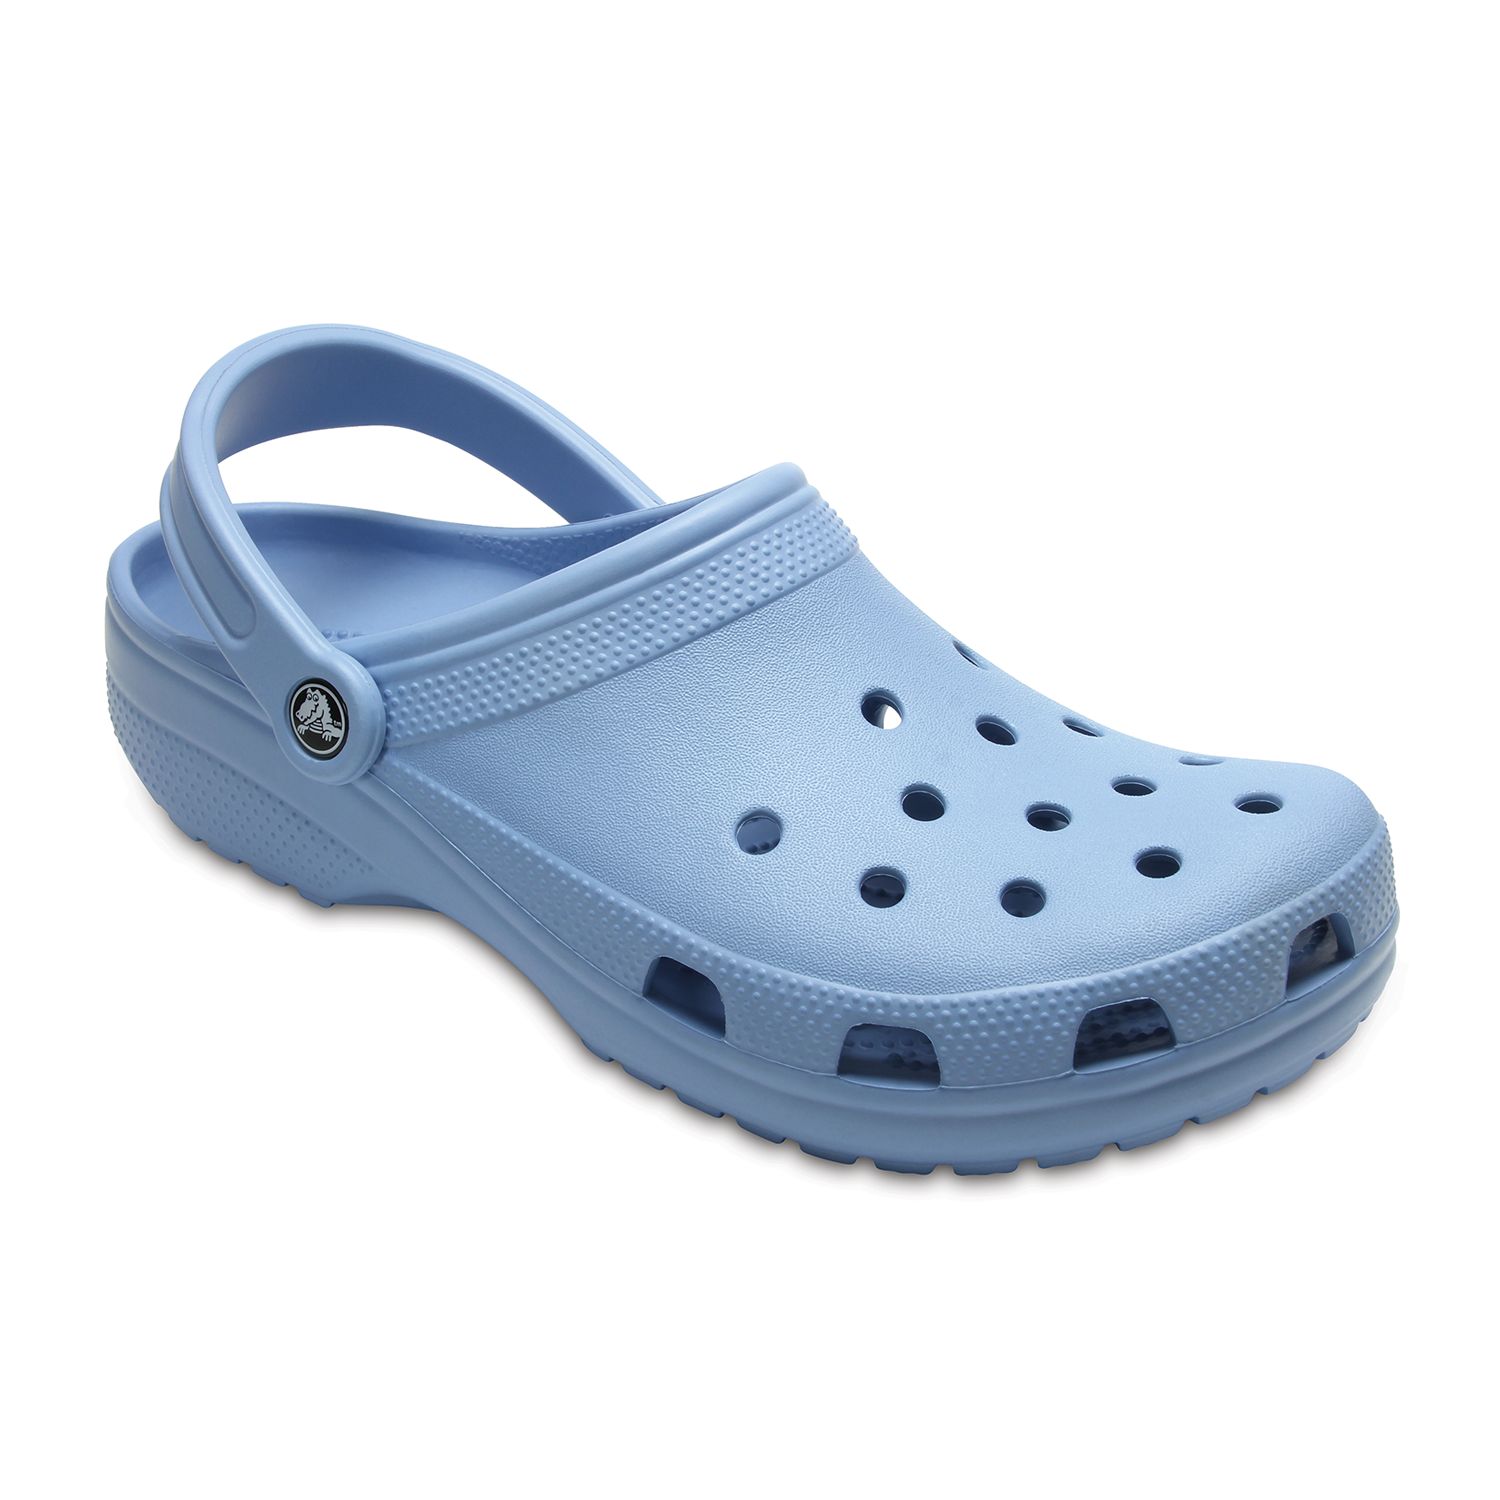 blue and grey crocs